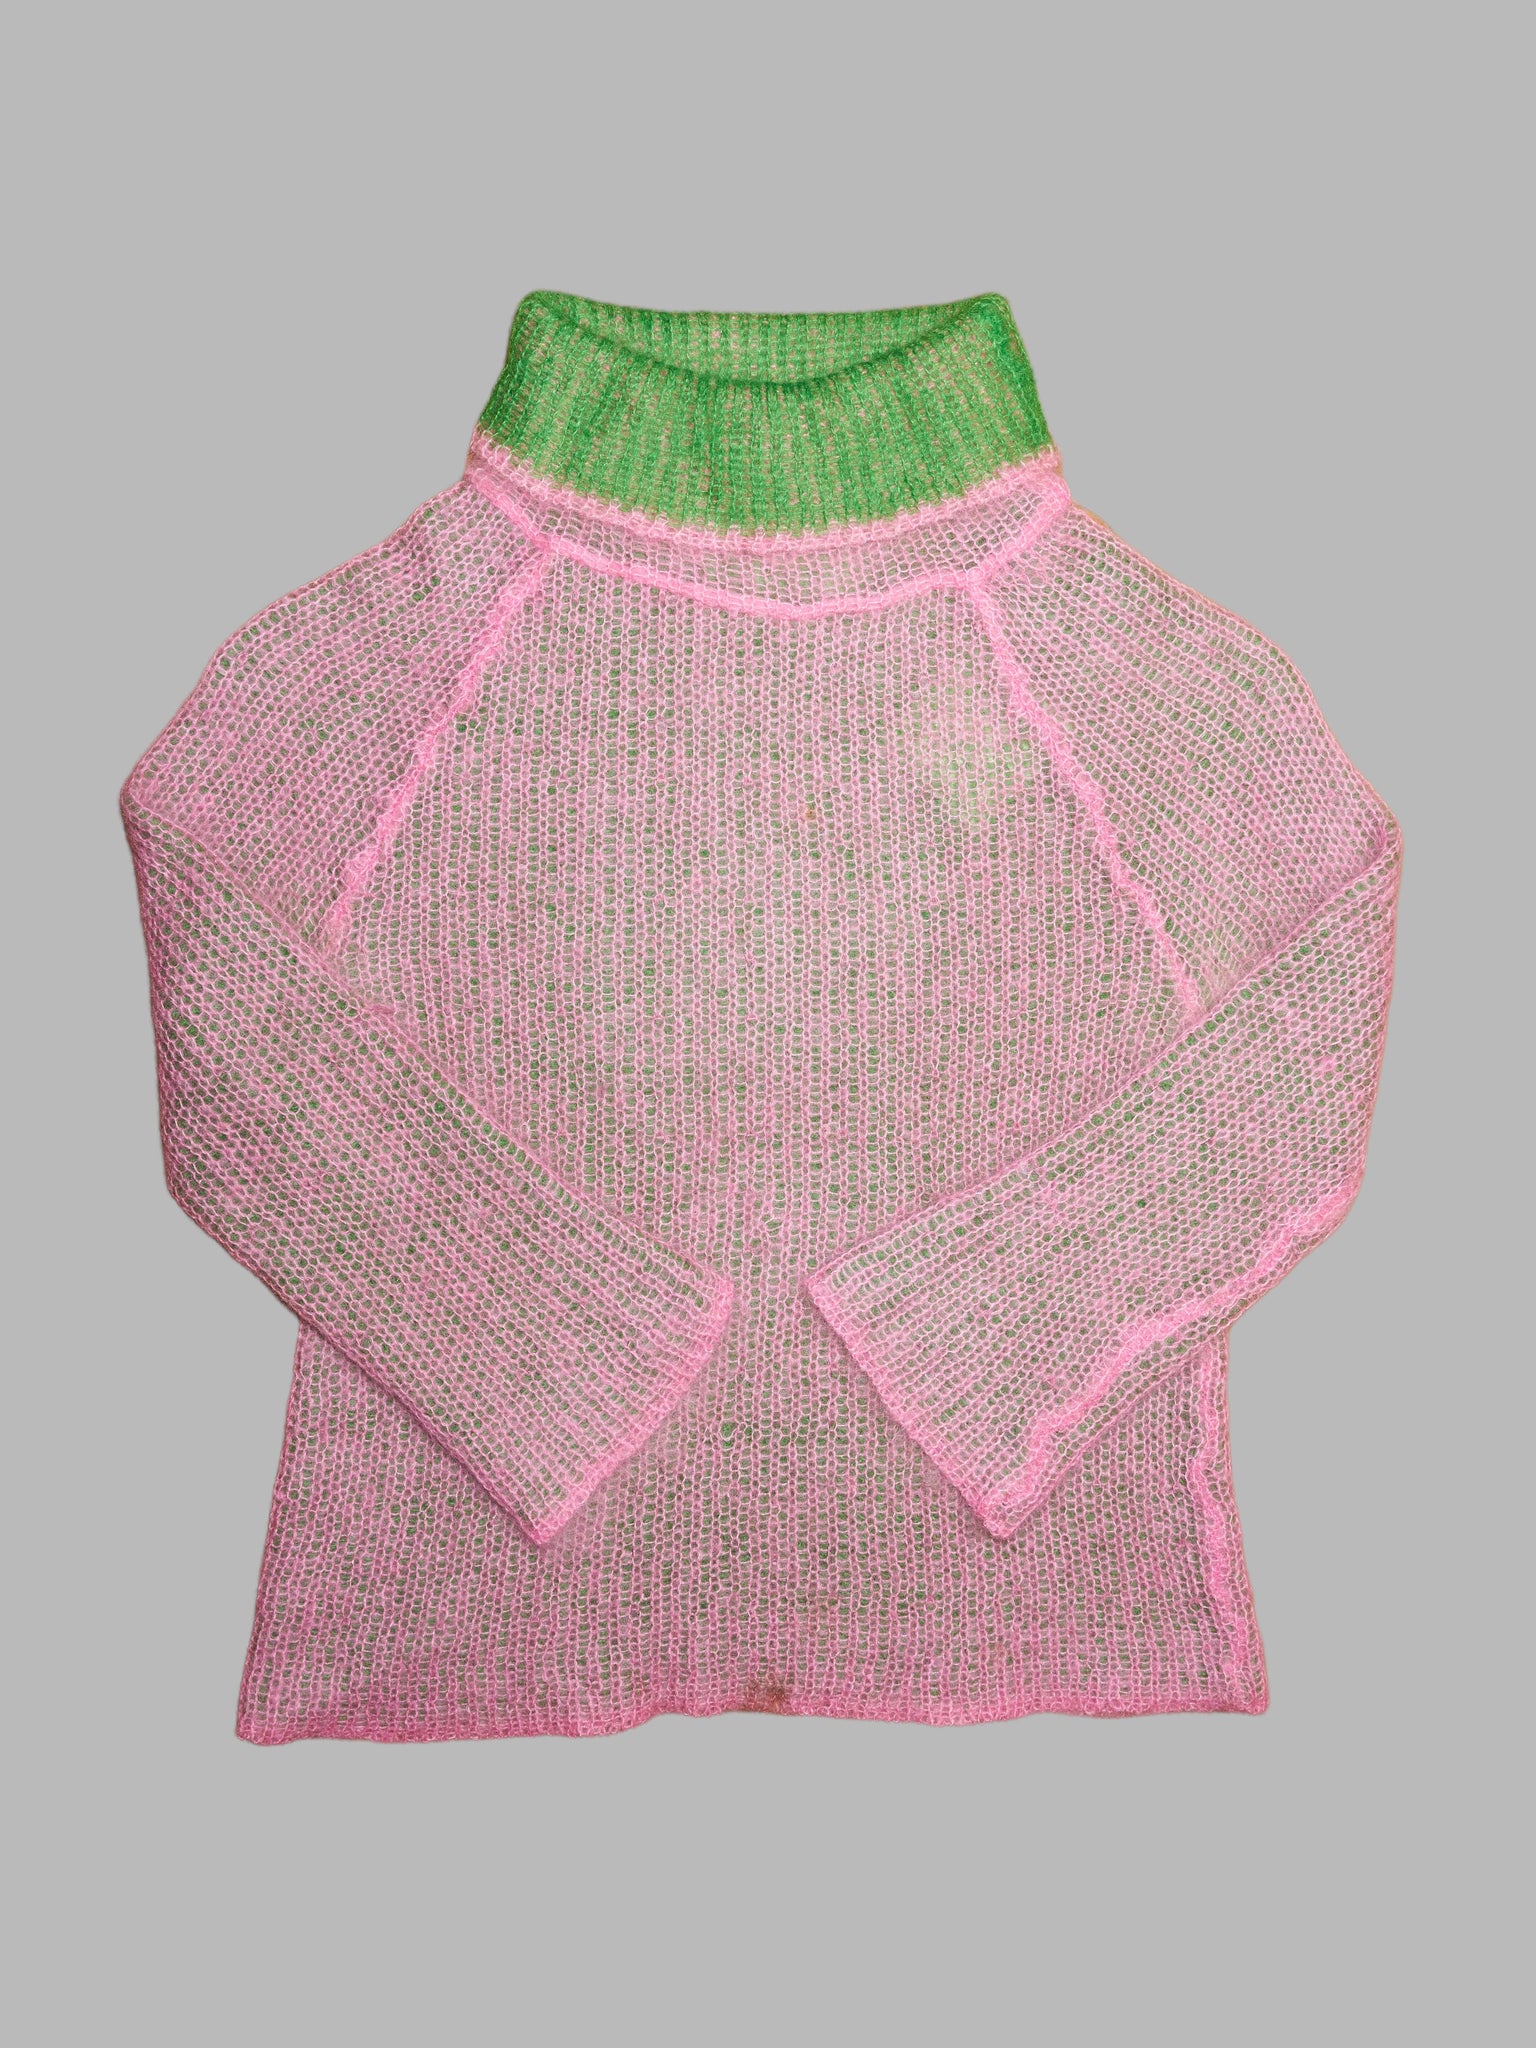 Junya Watanabe Comme des Garcons 1999 pink green reversible turtleneck - XS